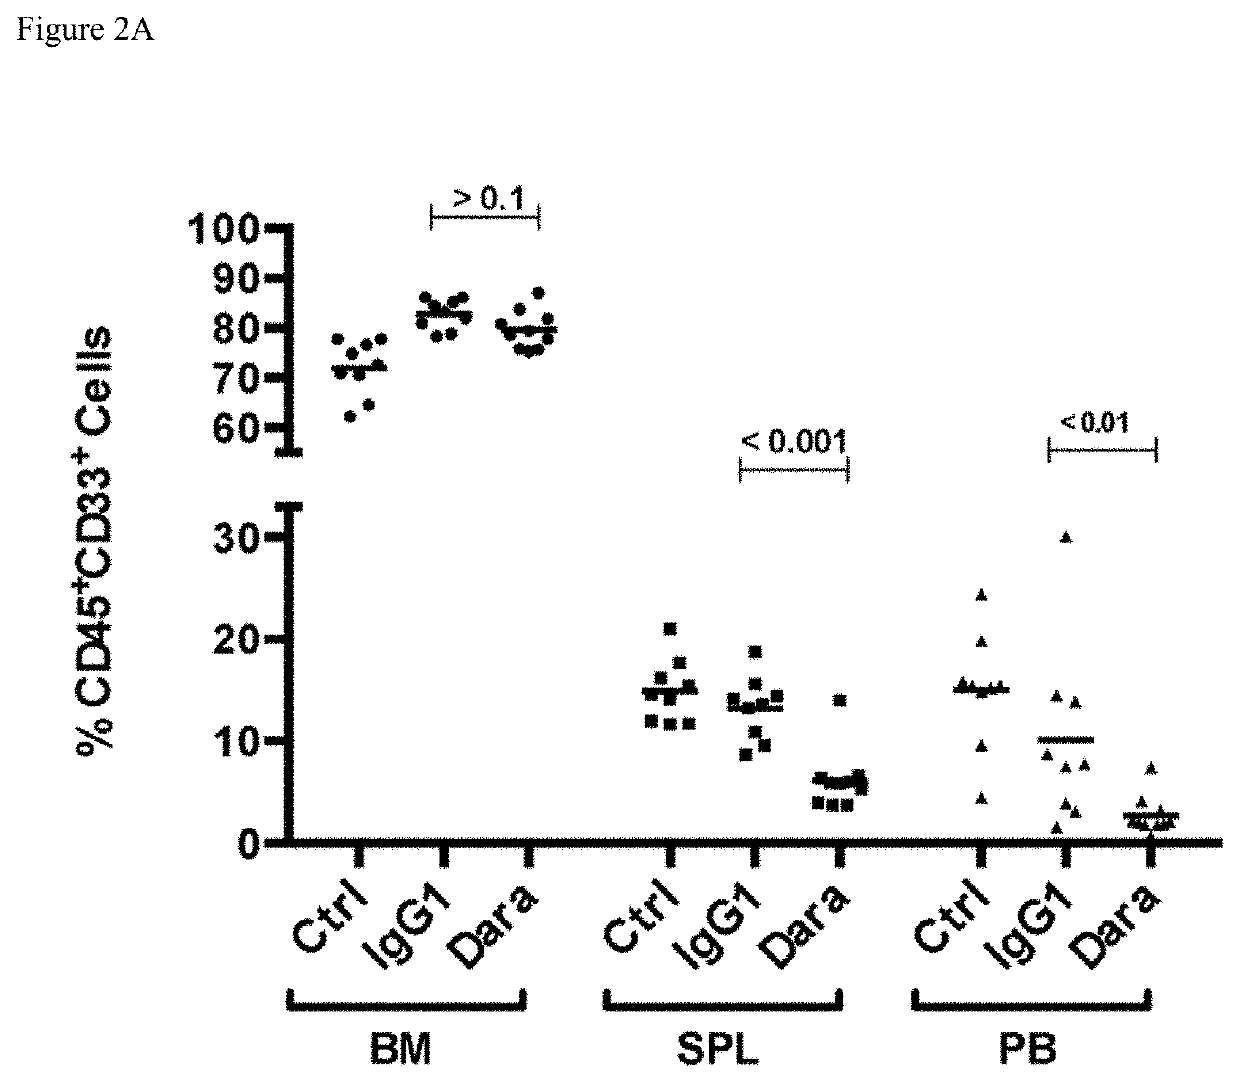 Anti-CD38 antibodies for treatment of acute myeloid leukemia